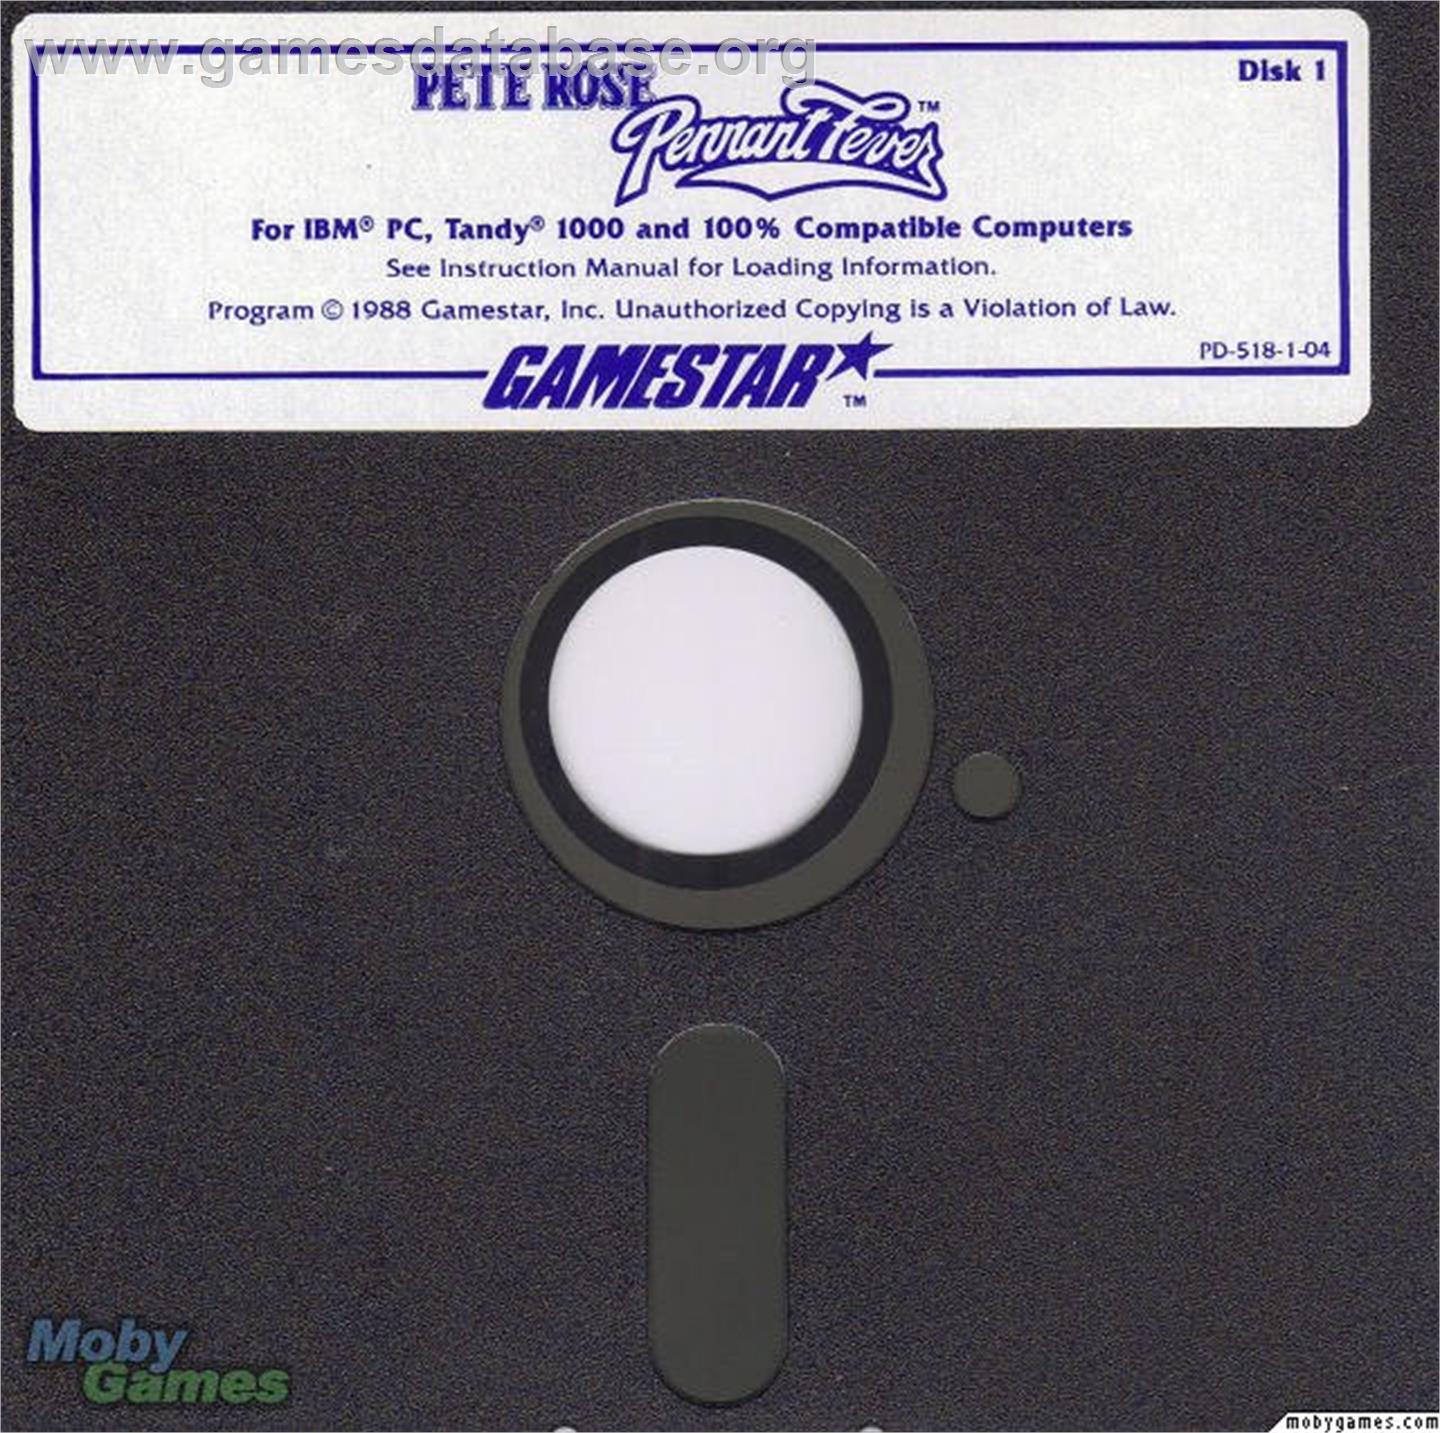 Pete Rose Pennant Fever - Microsoft DOS - Artwork - Disc